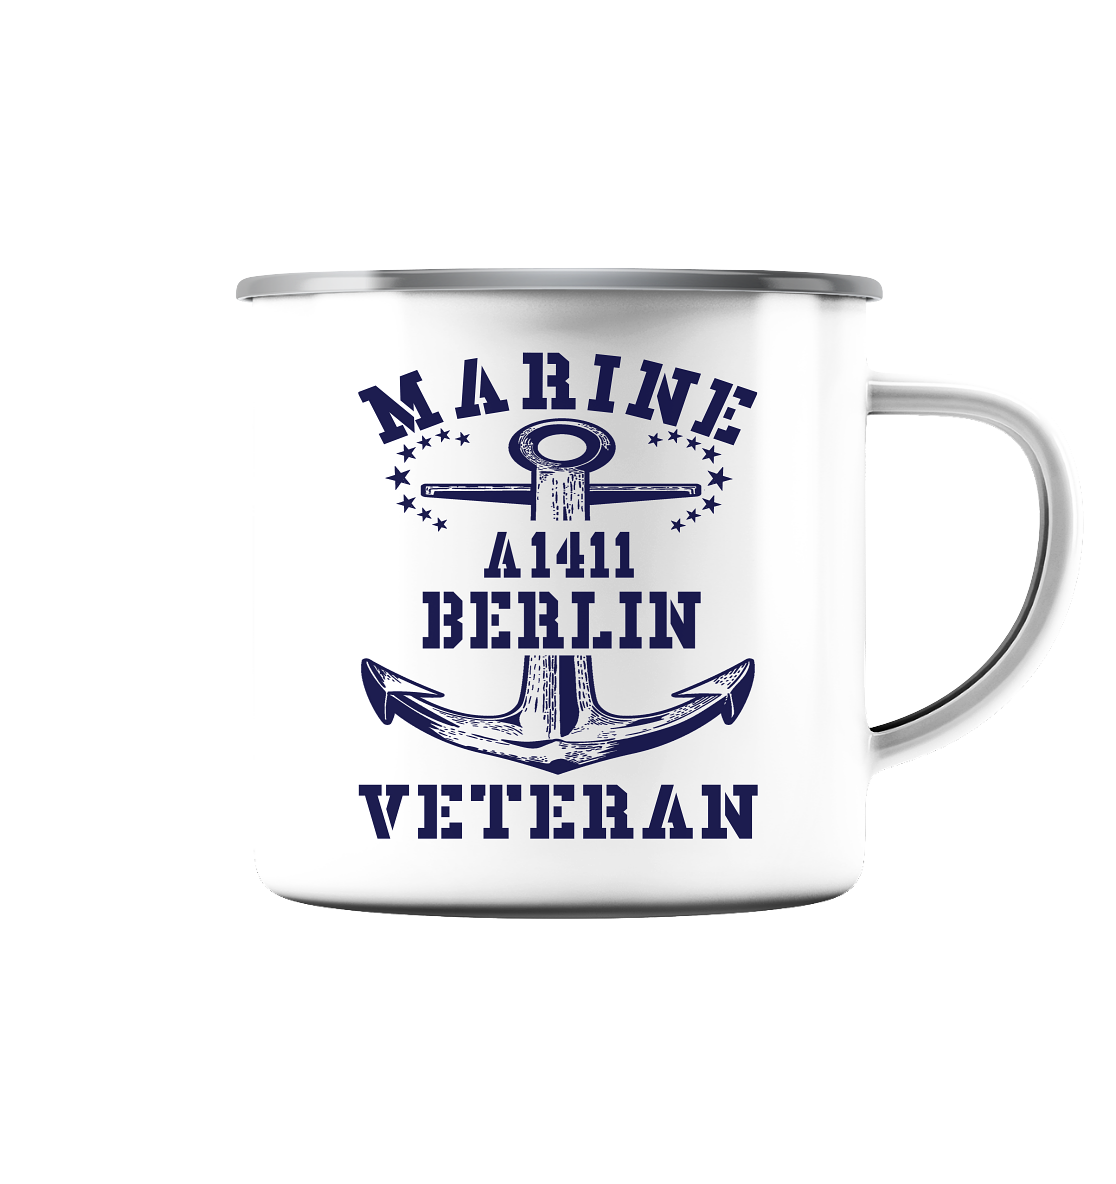 EGV A1411 BERLIN Marine Veteran - Emaille Tasse (Silber)